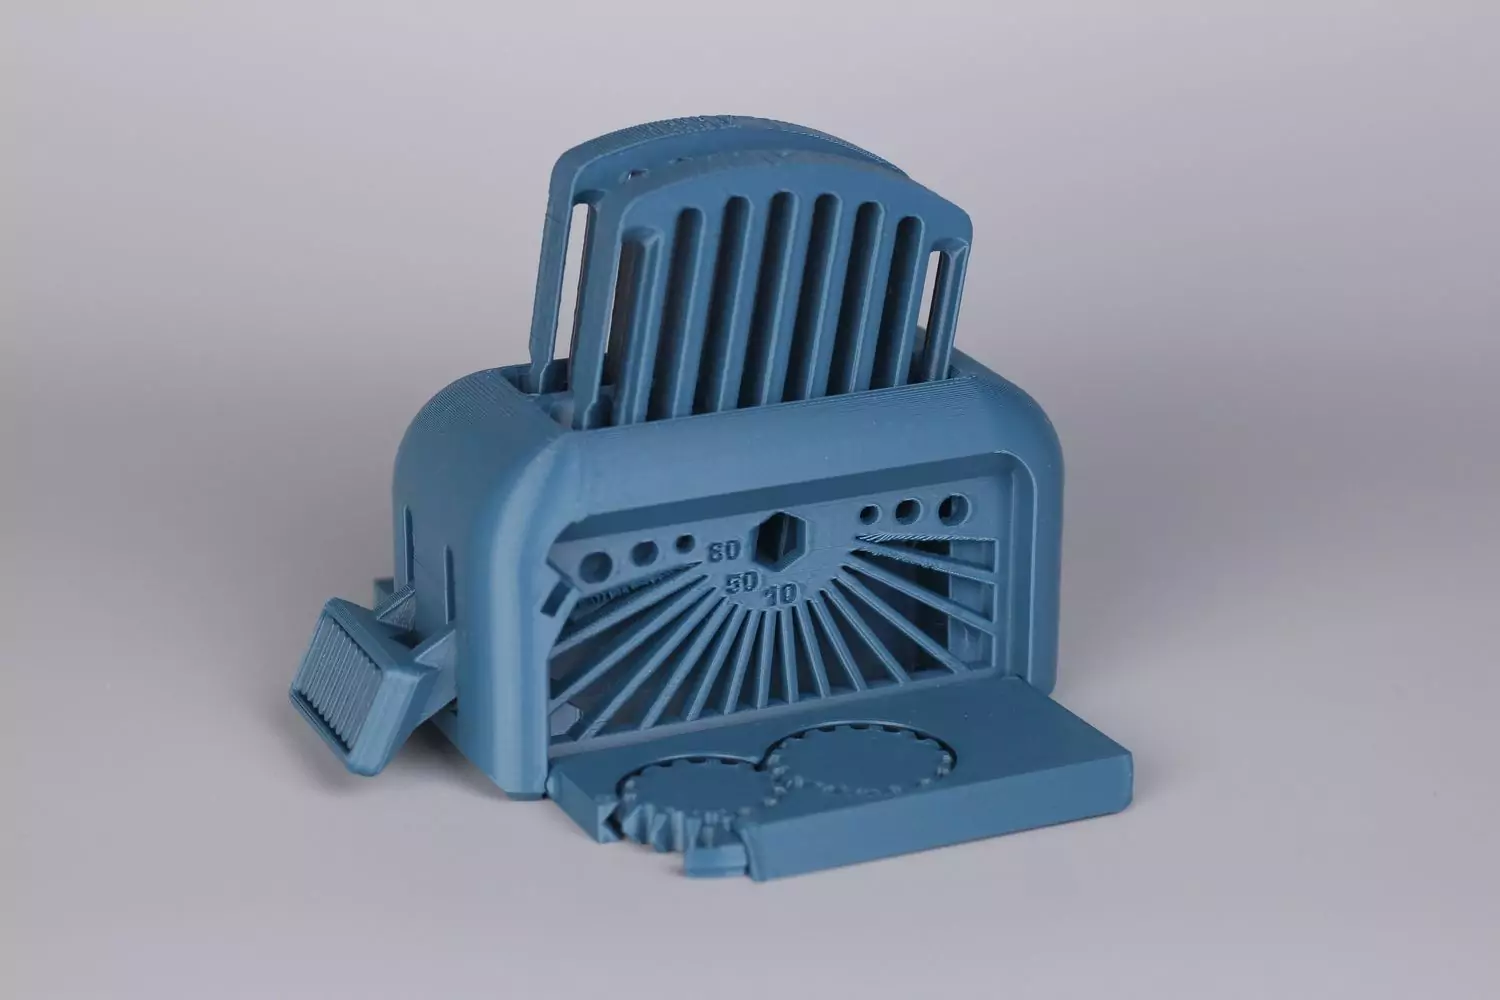 Torture Toaster calibration test on BIQU Hurakan3 | BIQU Hurakan Review: Klipper Firmware on a Budget